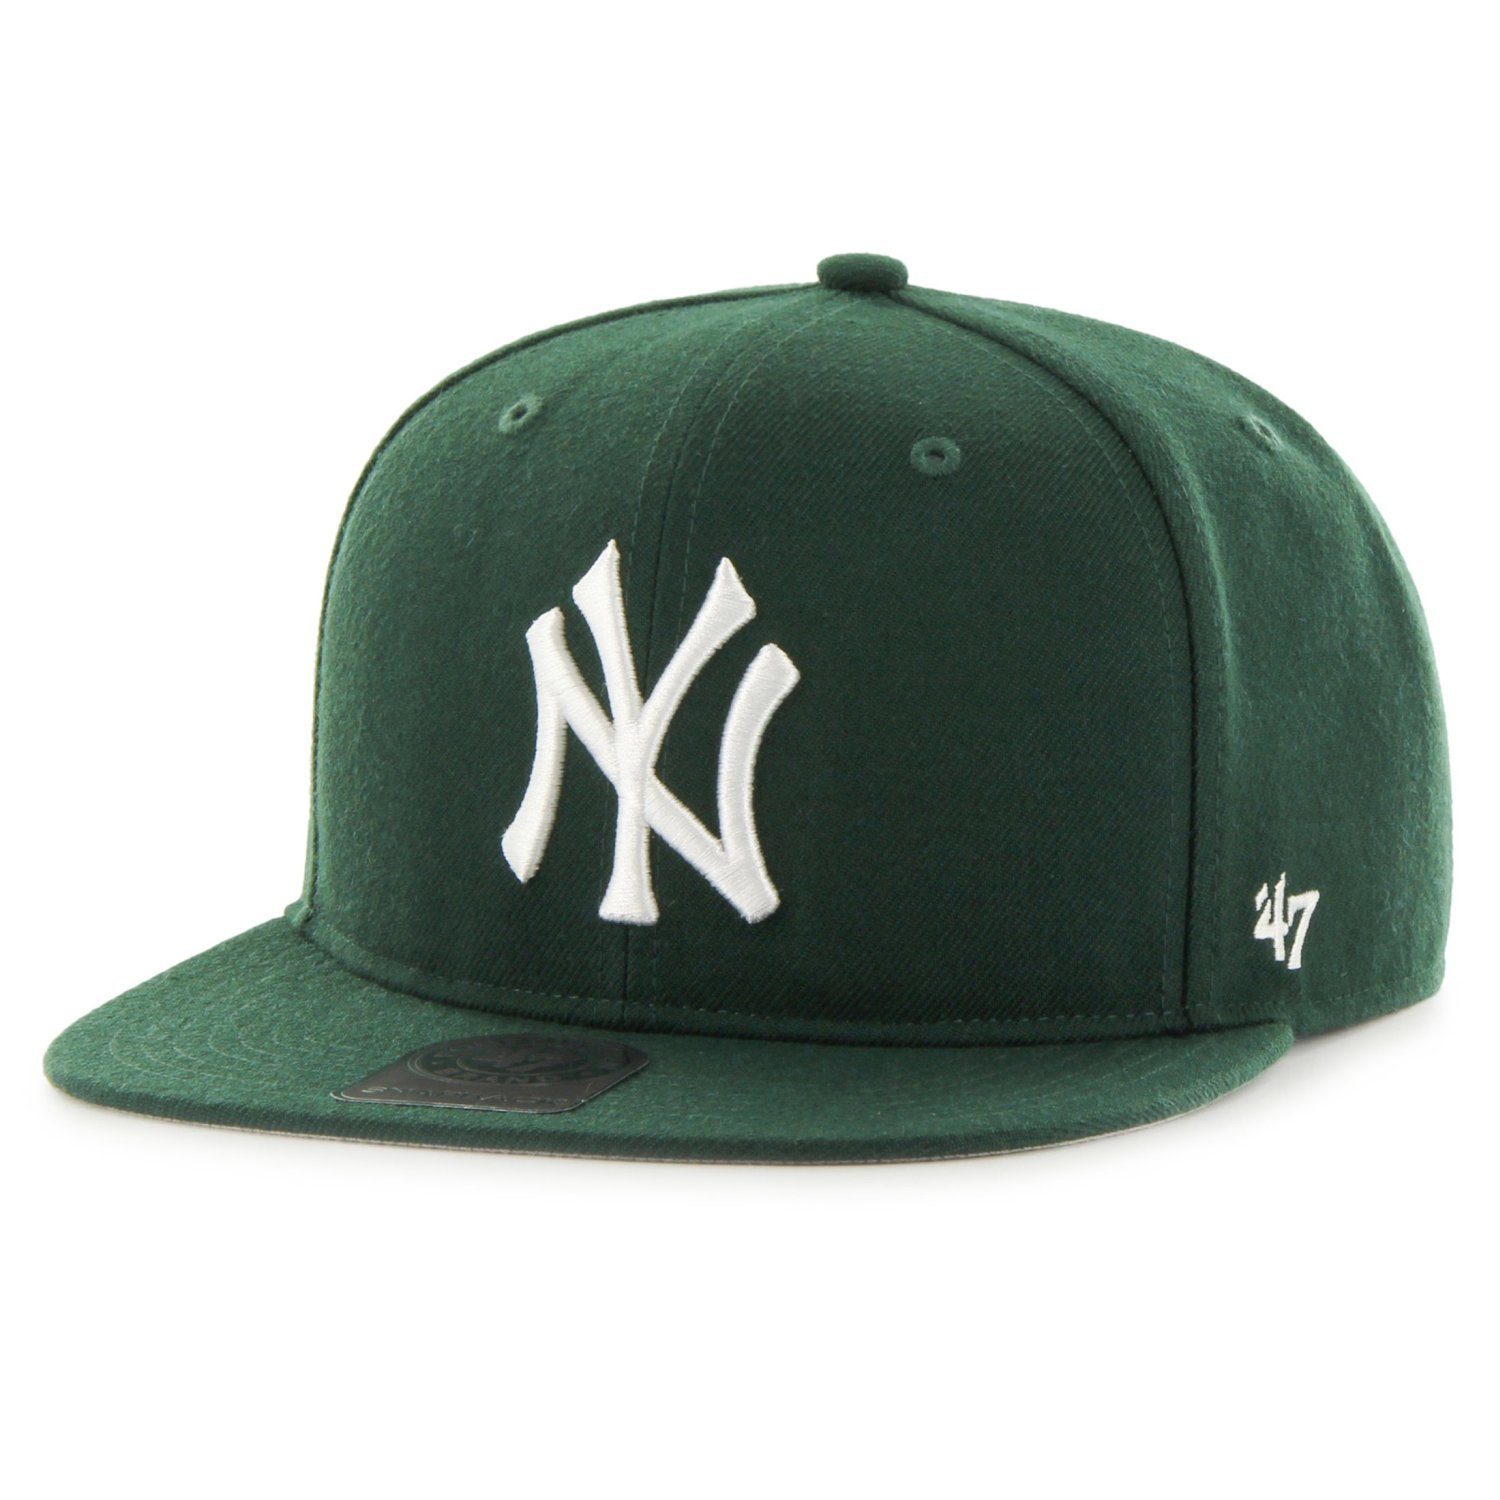 '47 Brand Snapback Cap NO SHOT New York Yankees dunkelgrün